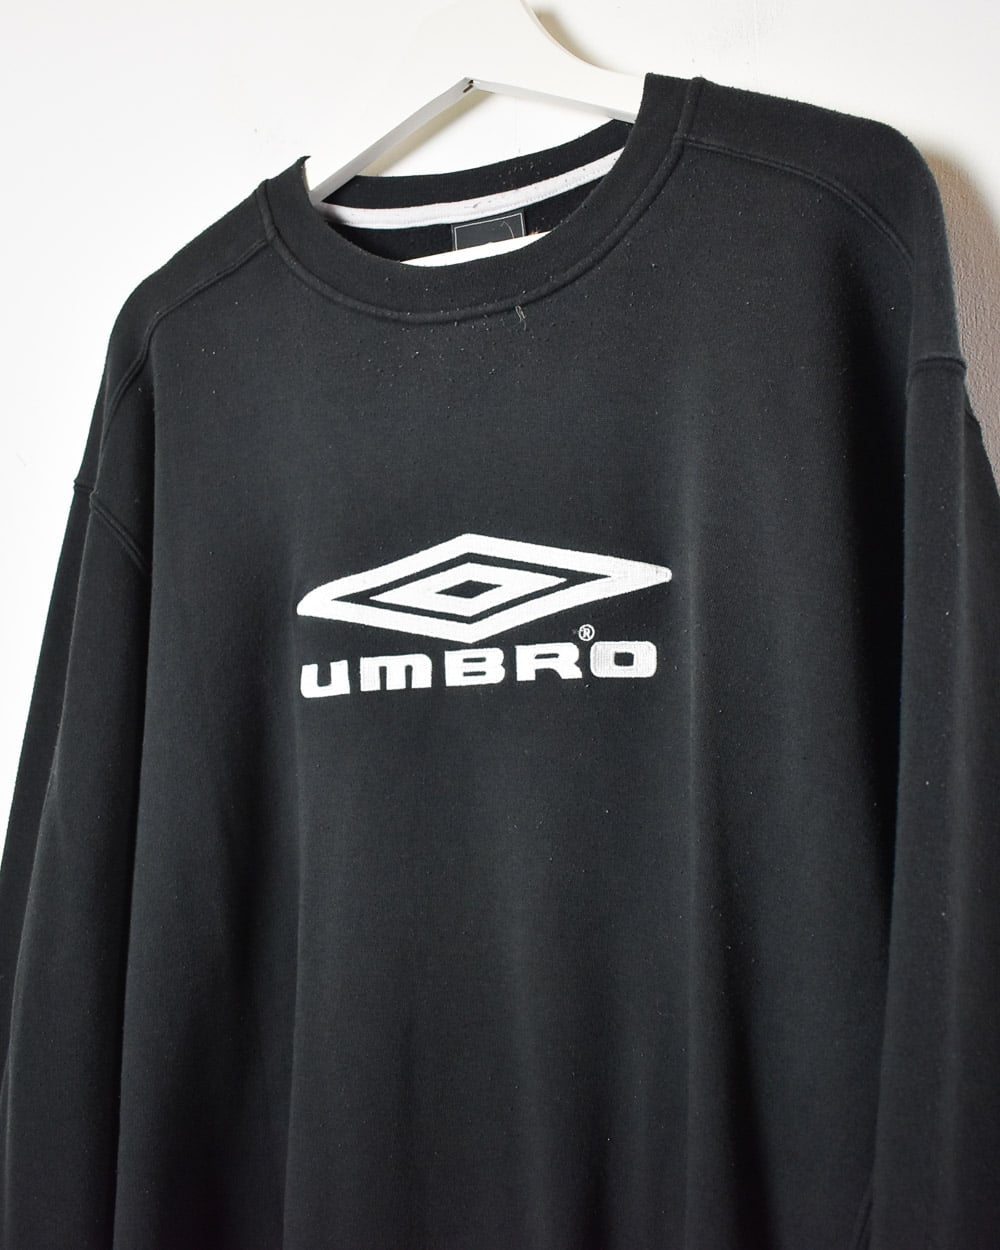 Black Umbro Sweatshirt - X-Large